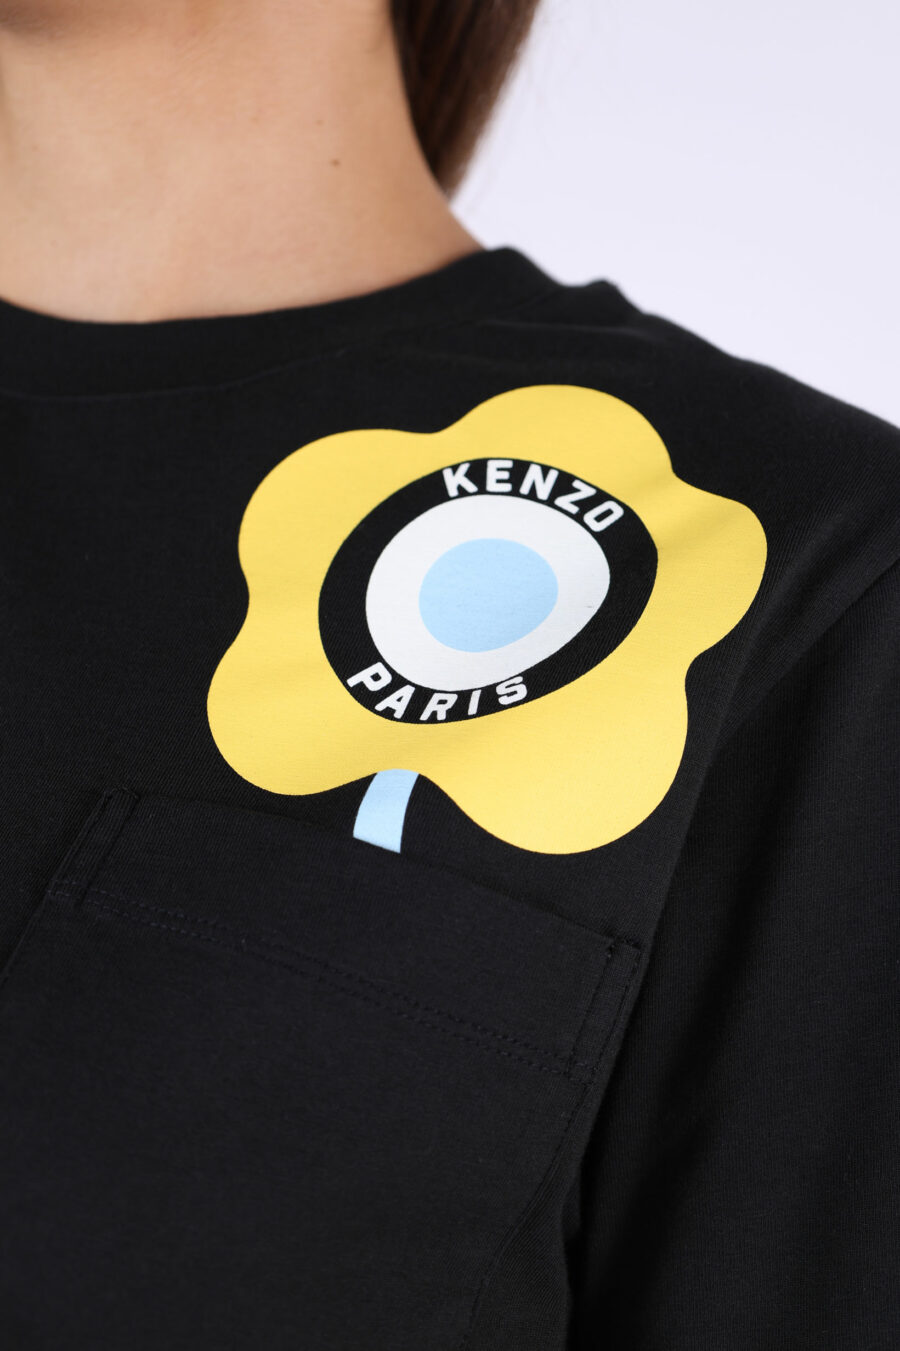 Schwarzes T-Shirt mit gelbem "kenzo target" Logo - 361223054662202016